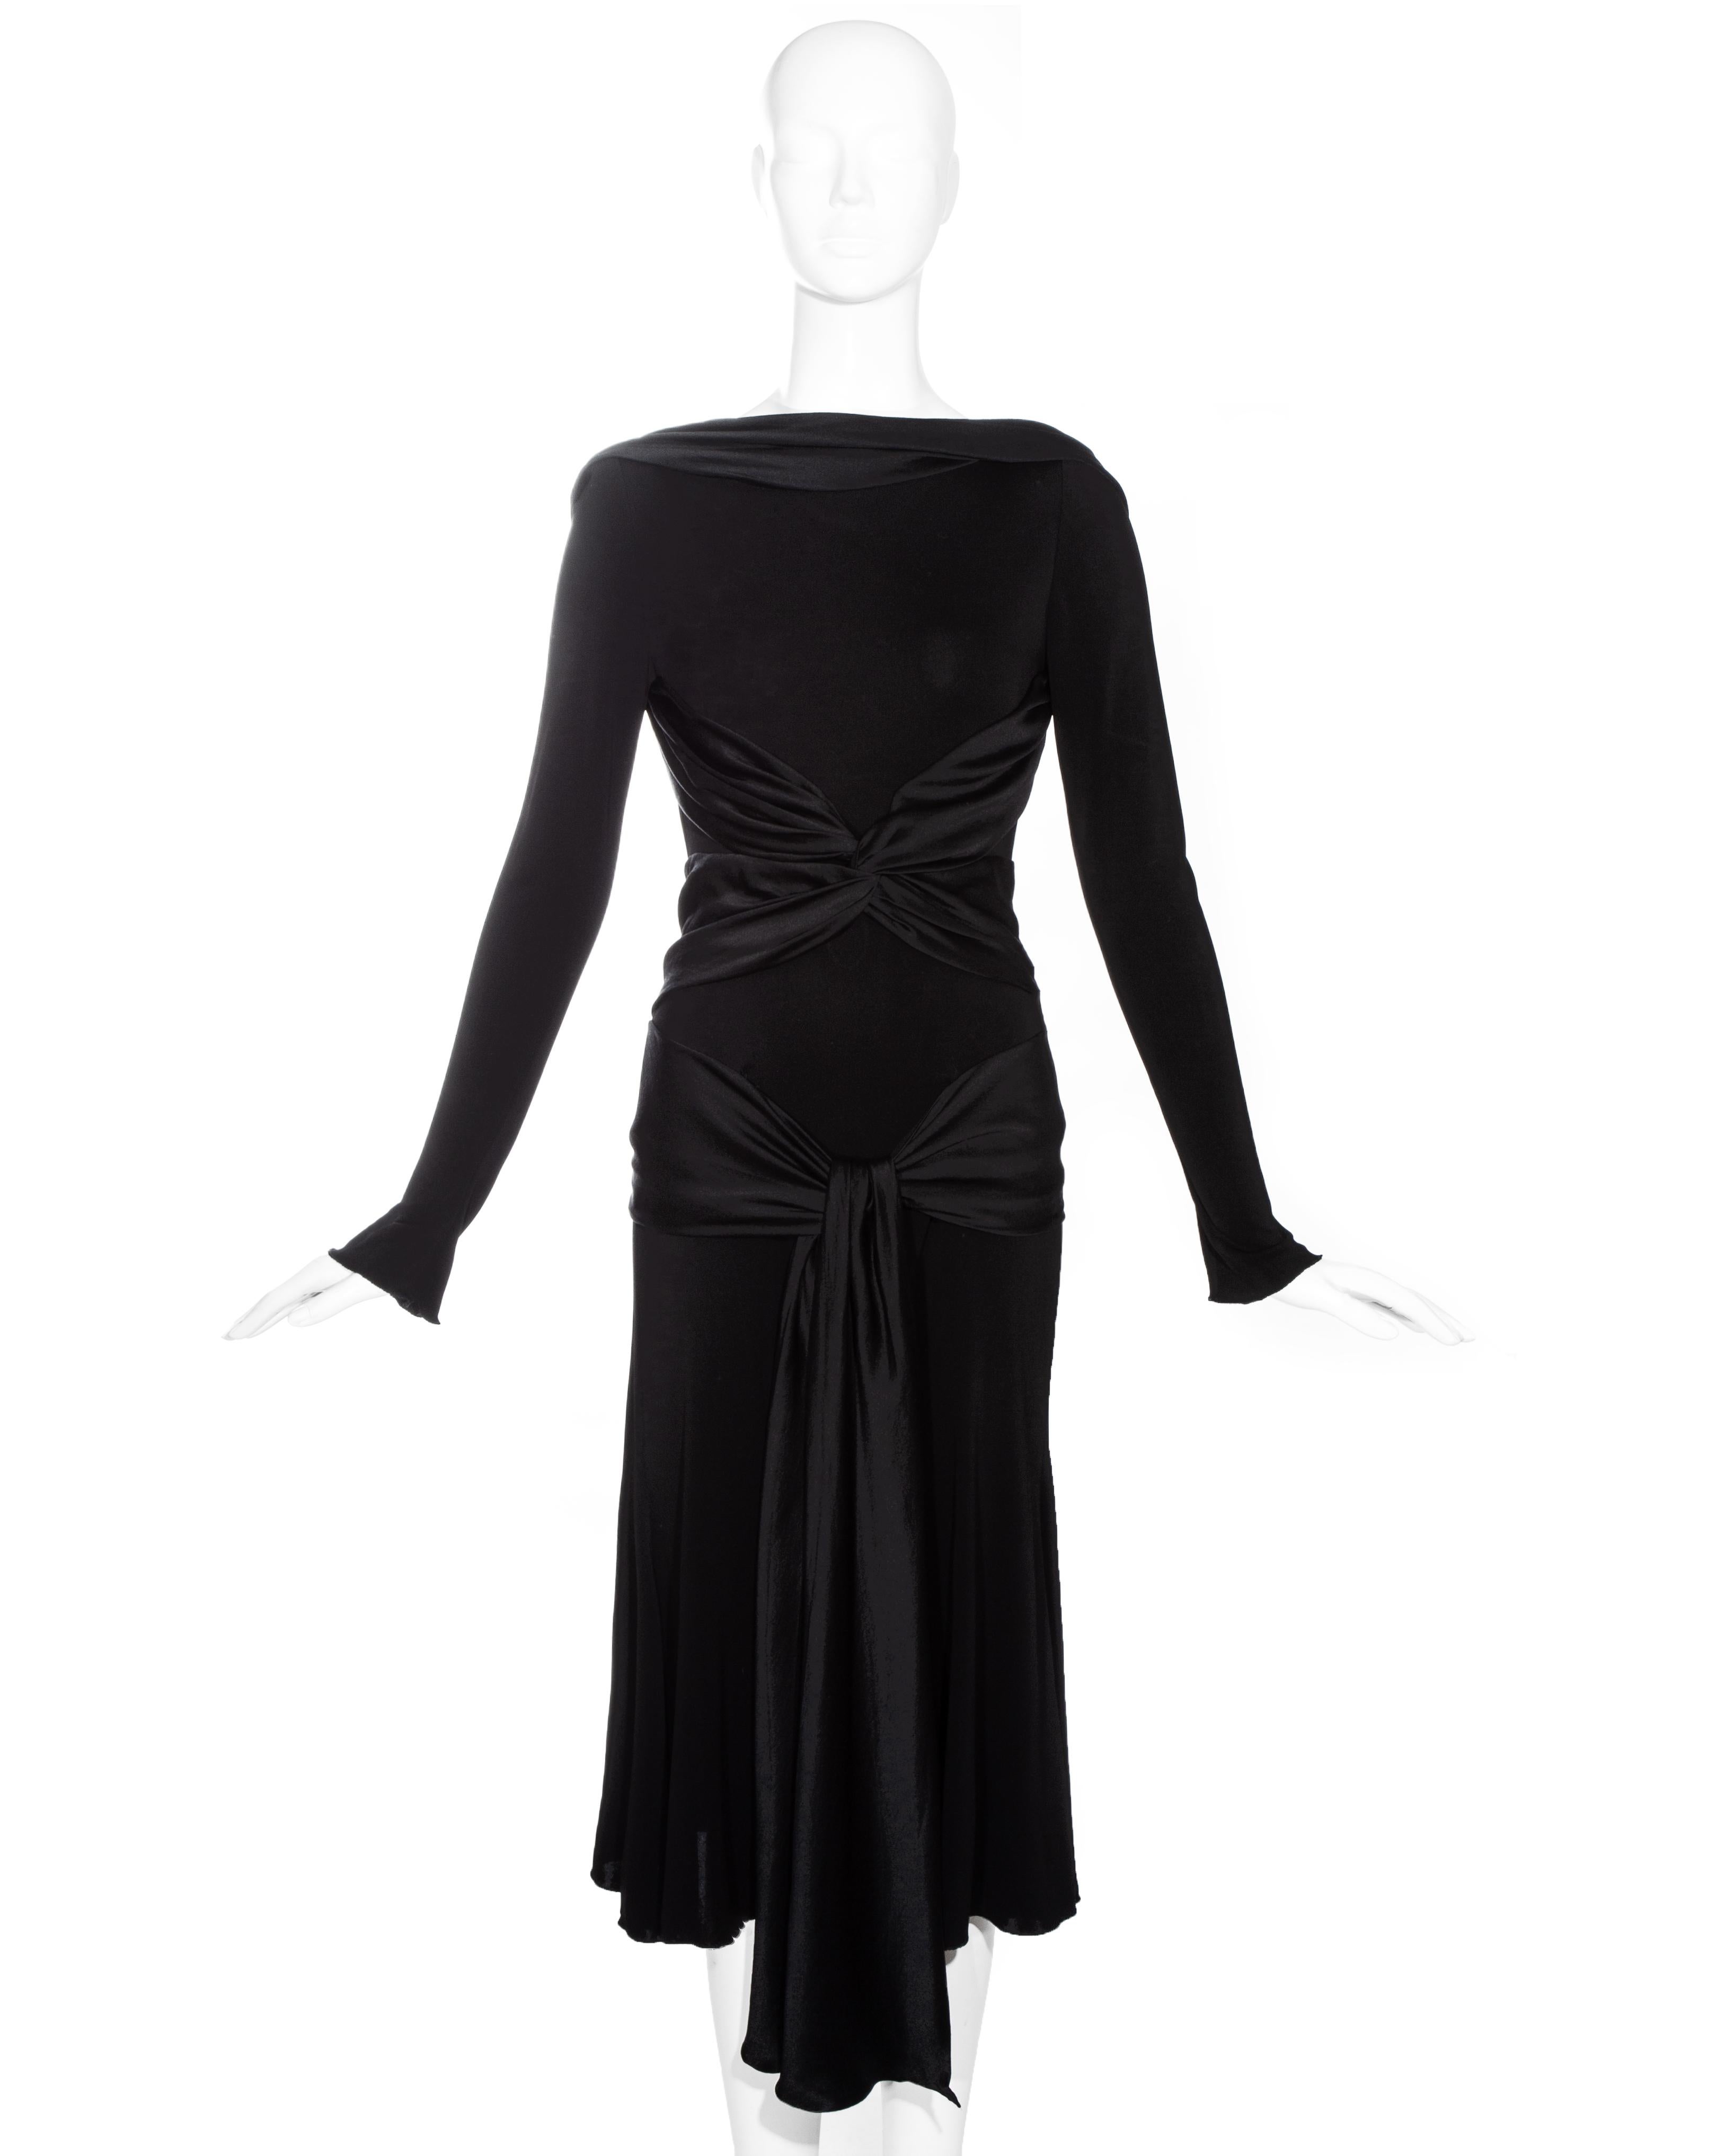 Alexander McQueen black evening dress with appliquéd silk scarfs fastening around the hips.

Fall-Winter 2004